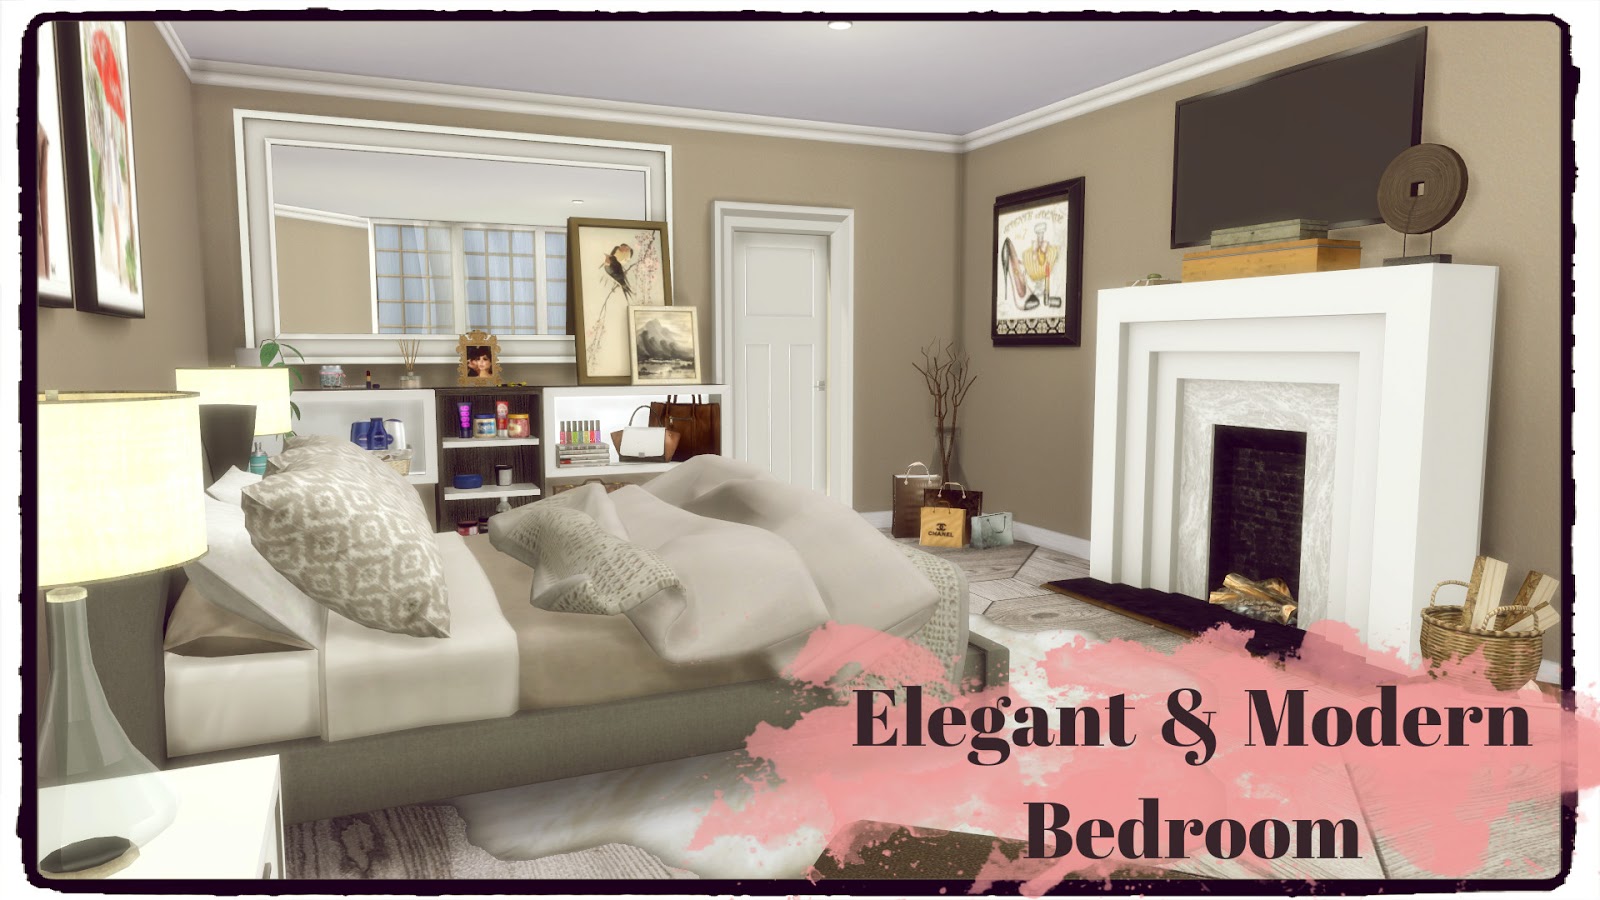 Sims 4 - Elegant & Modern Bedroom - Dinha